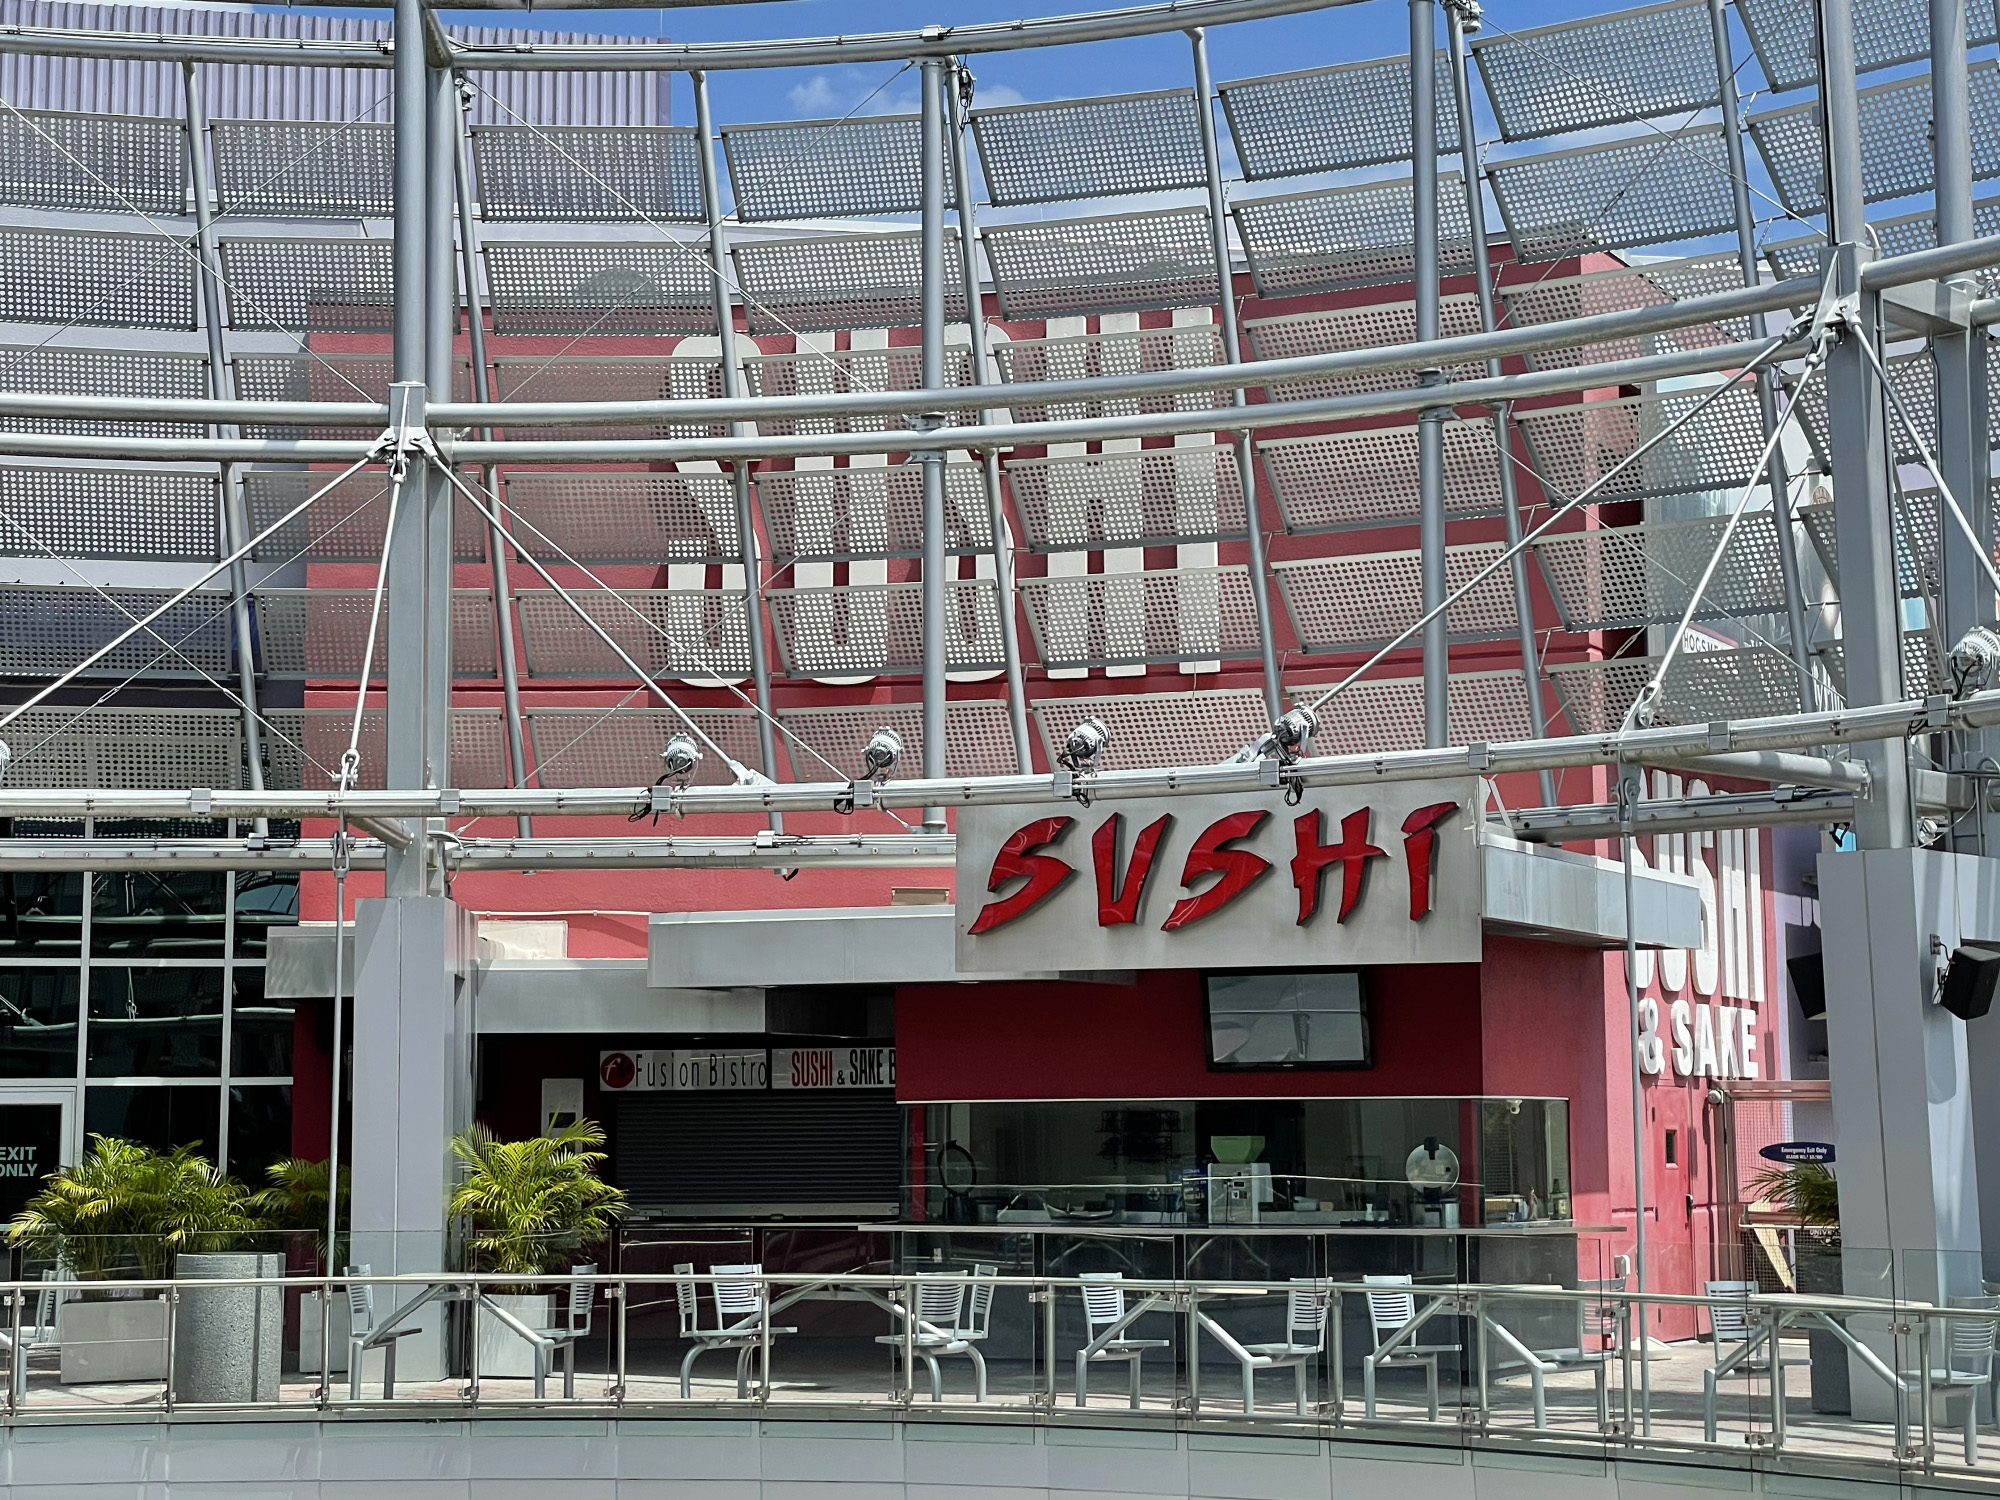 1669402856 864 Fusion Bistro Sushi Sake permanently closed at CityWalk Orlando